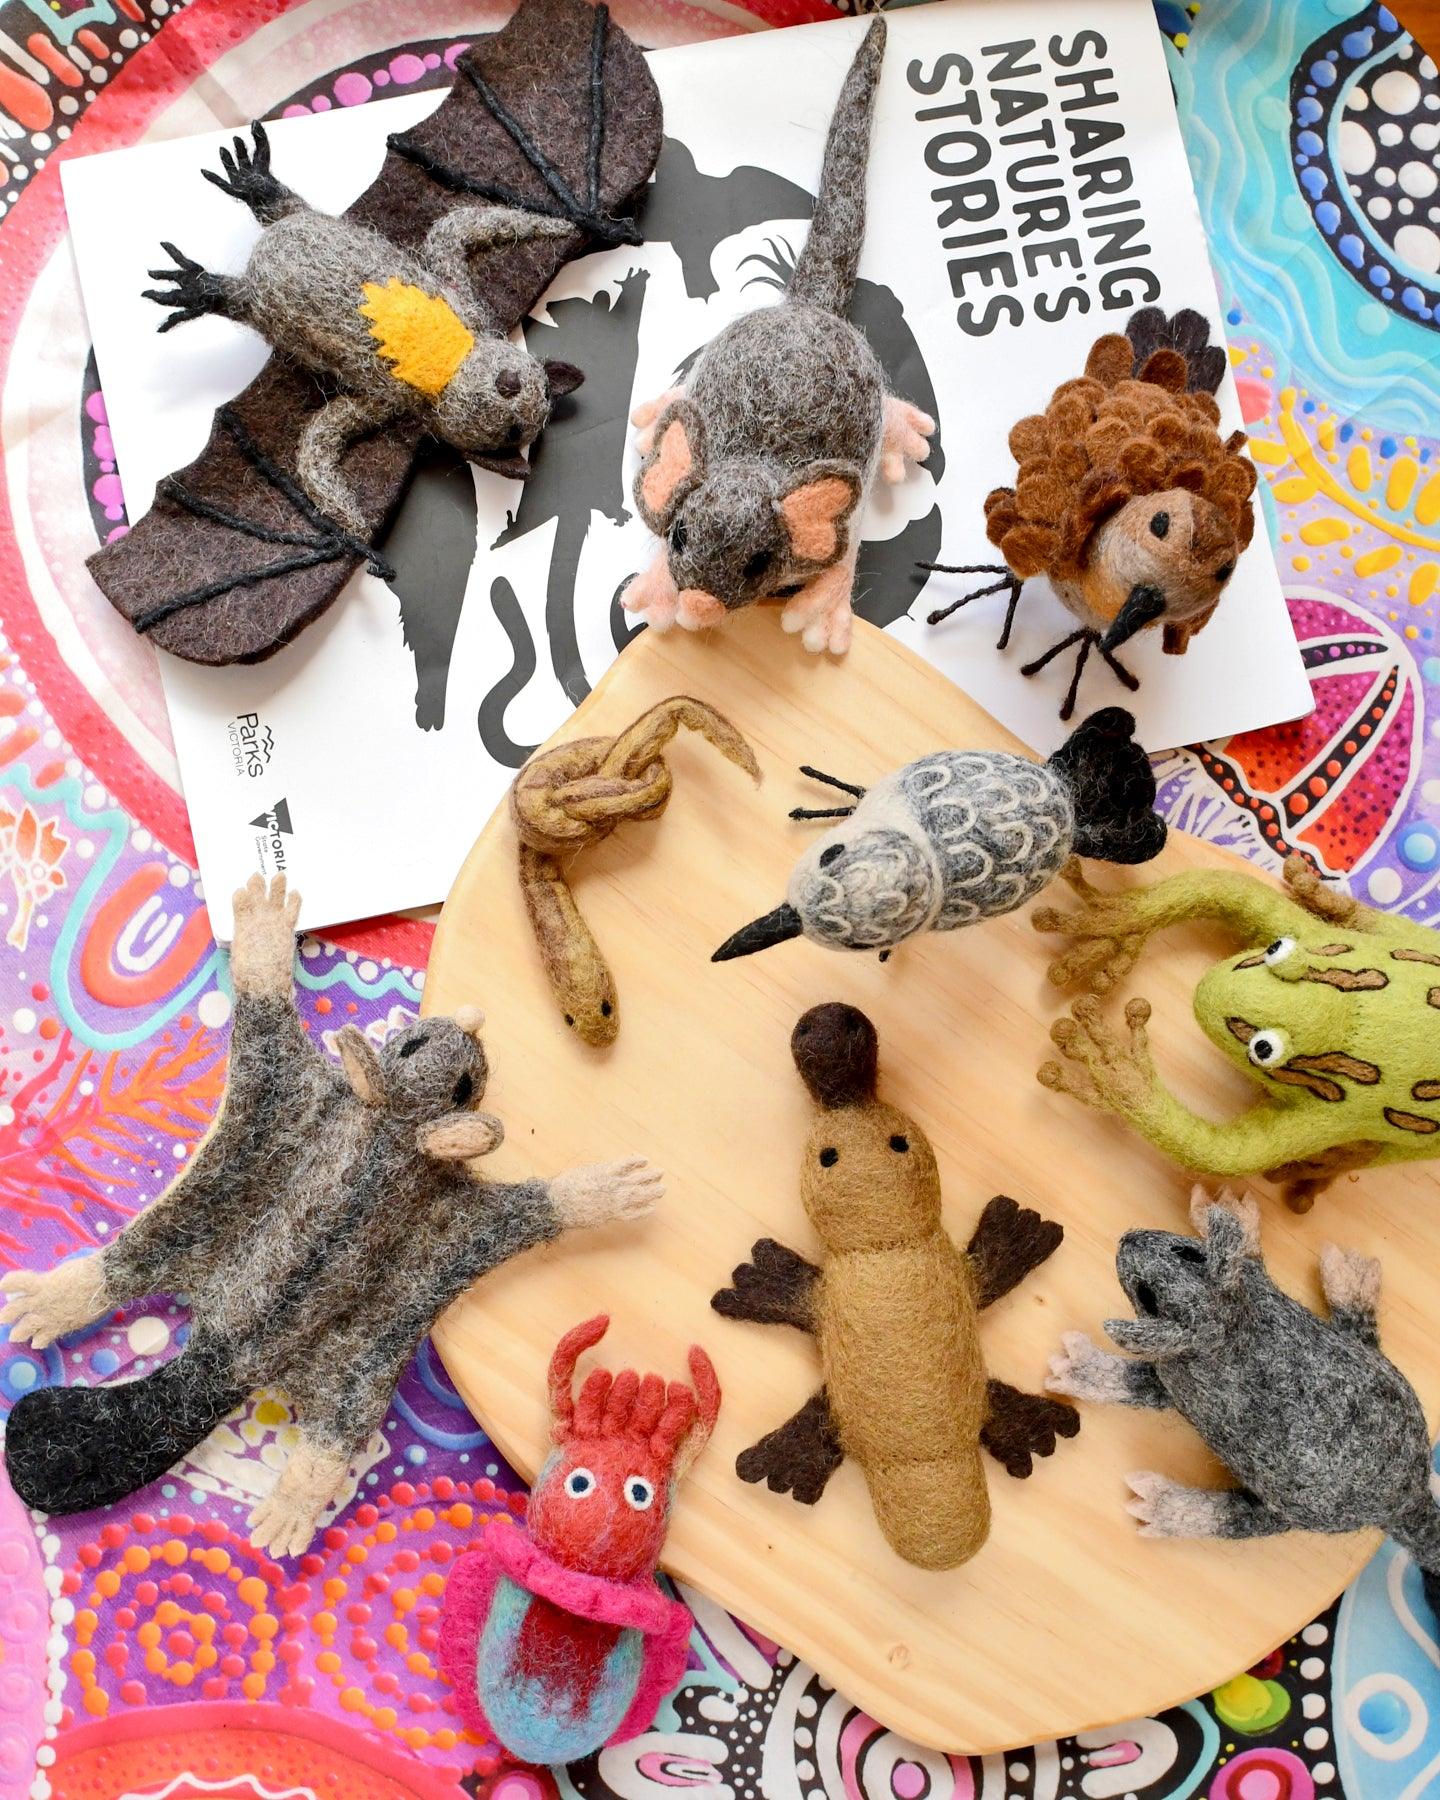 Felt Australian Toy - Brush-Tailed Phascogale - Parks Victoria Nature Mascots - Tara Treasures